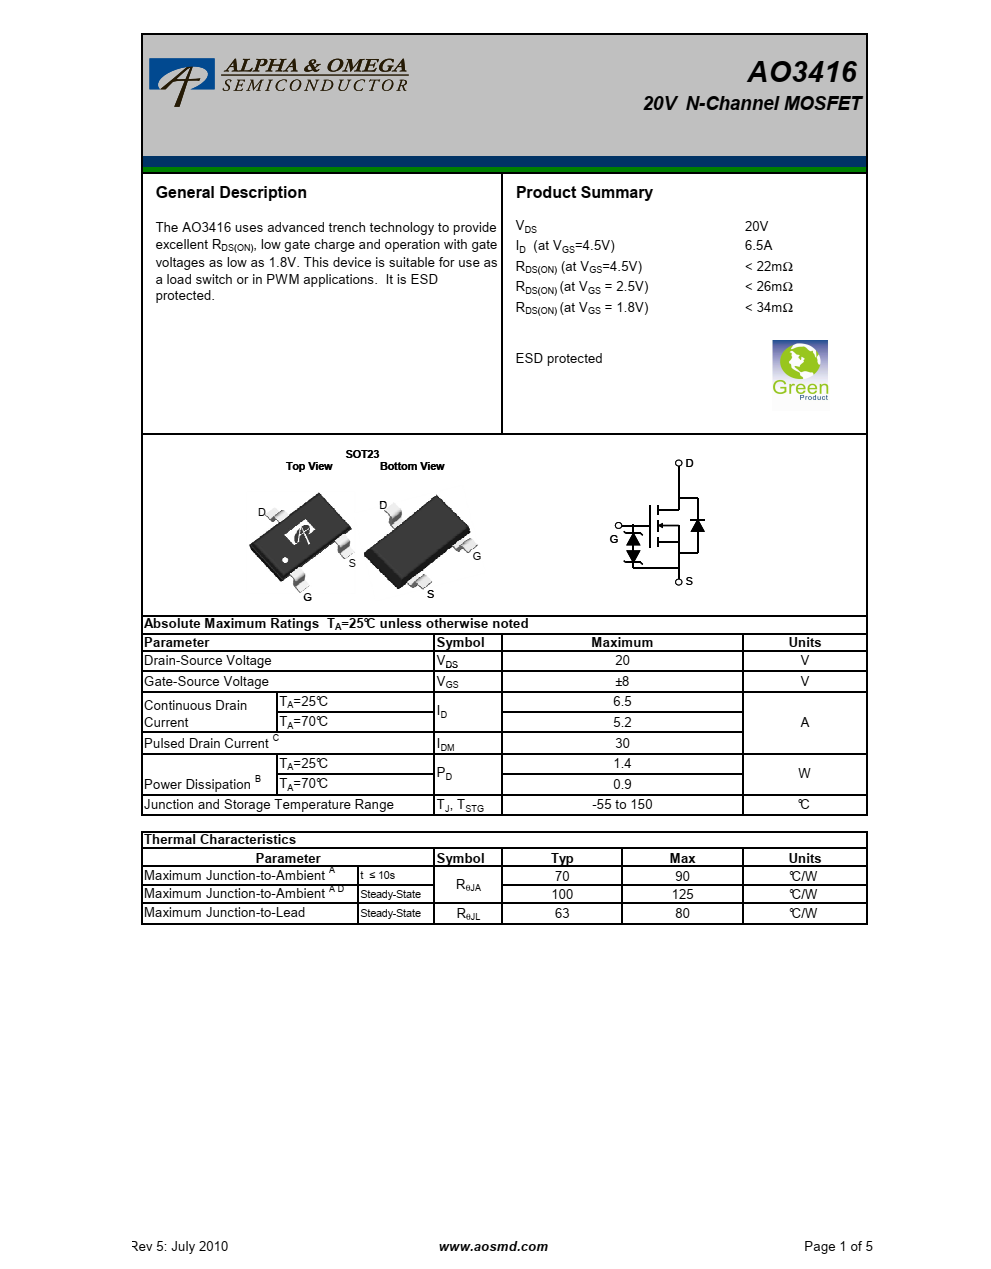 AO3416采用先进的沟槽技术，可提供出色的RD（ON）、低栅极电荷和低至1.8V的栅极电压